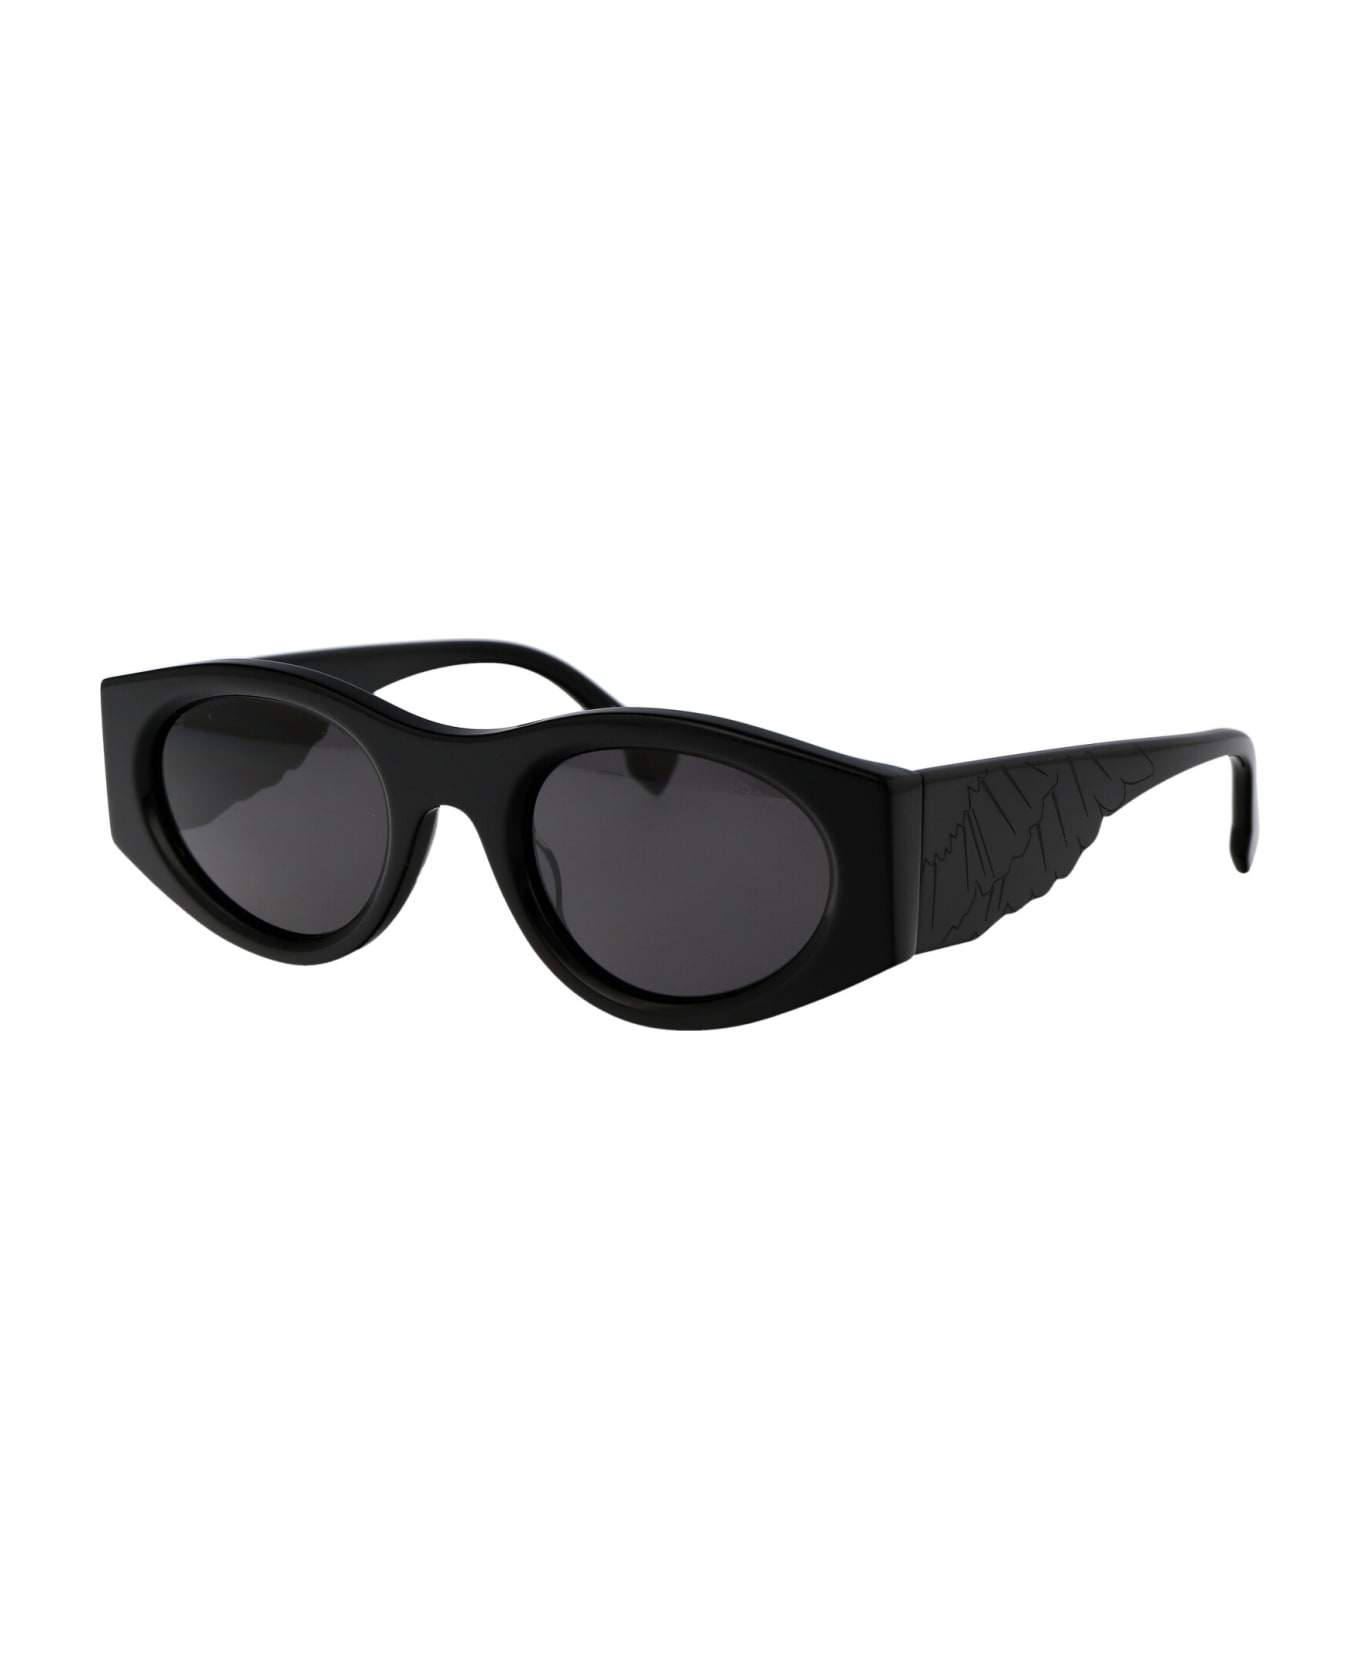 Marcelo Burlon Pasithea 021 Sunglasses - 1007 BLACK